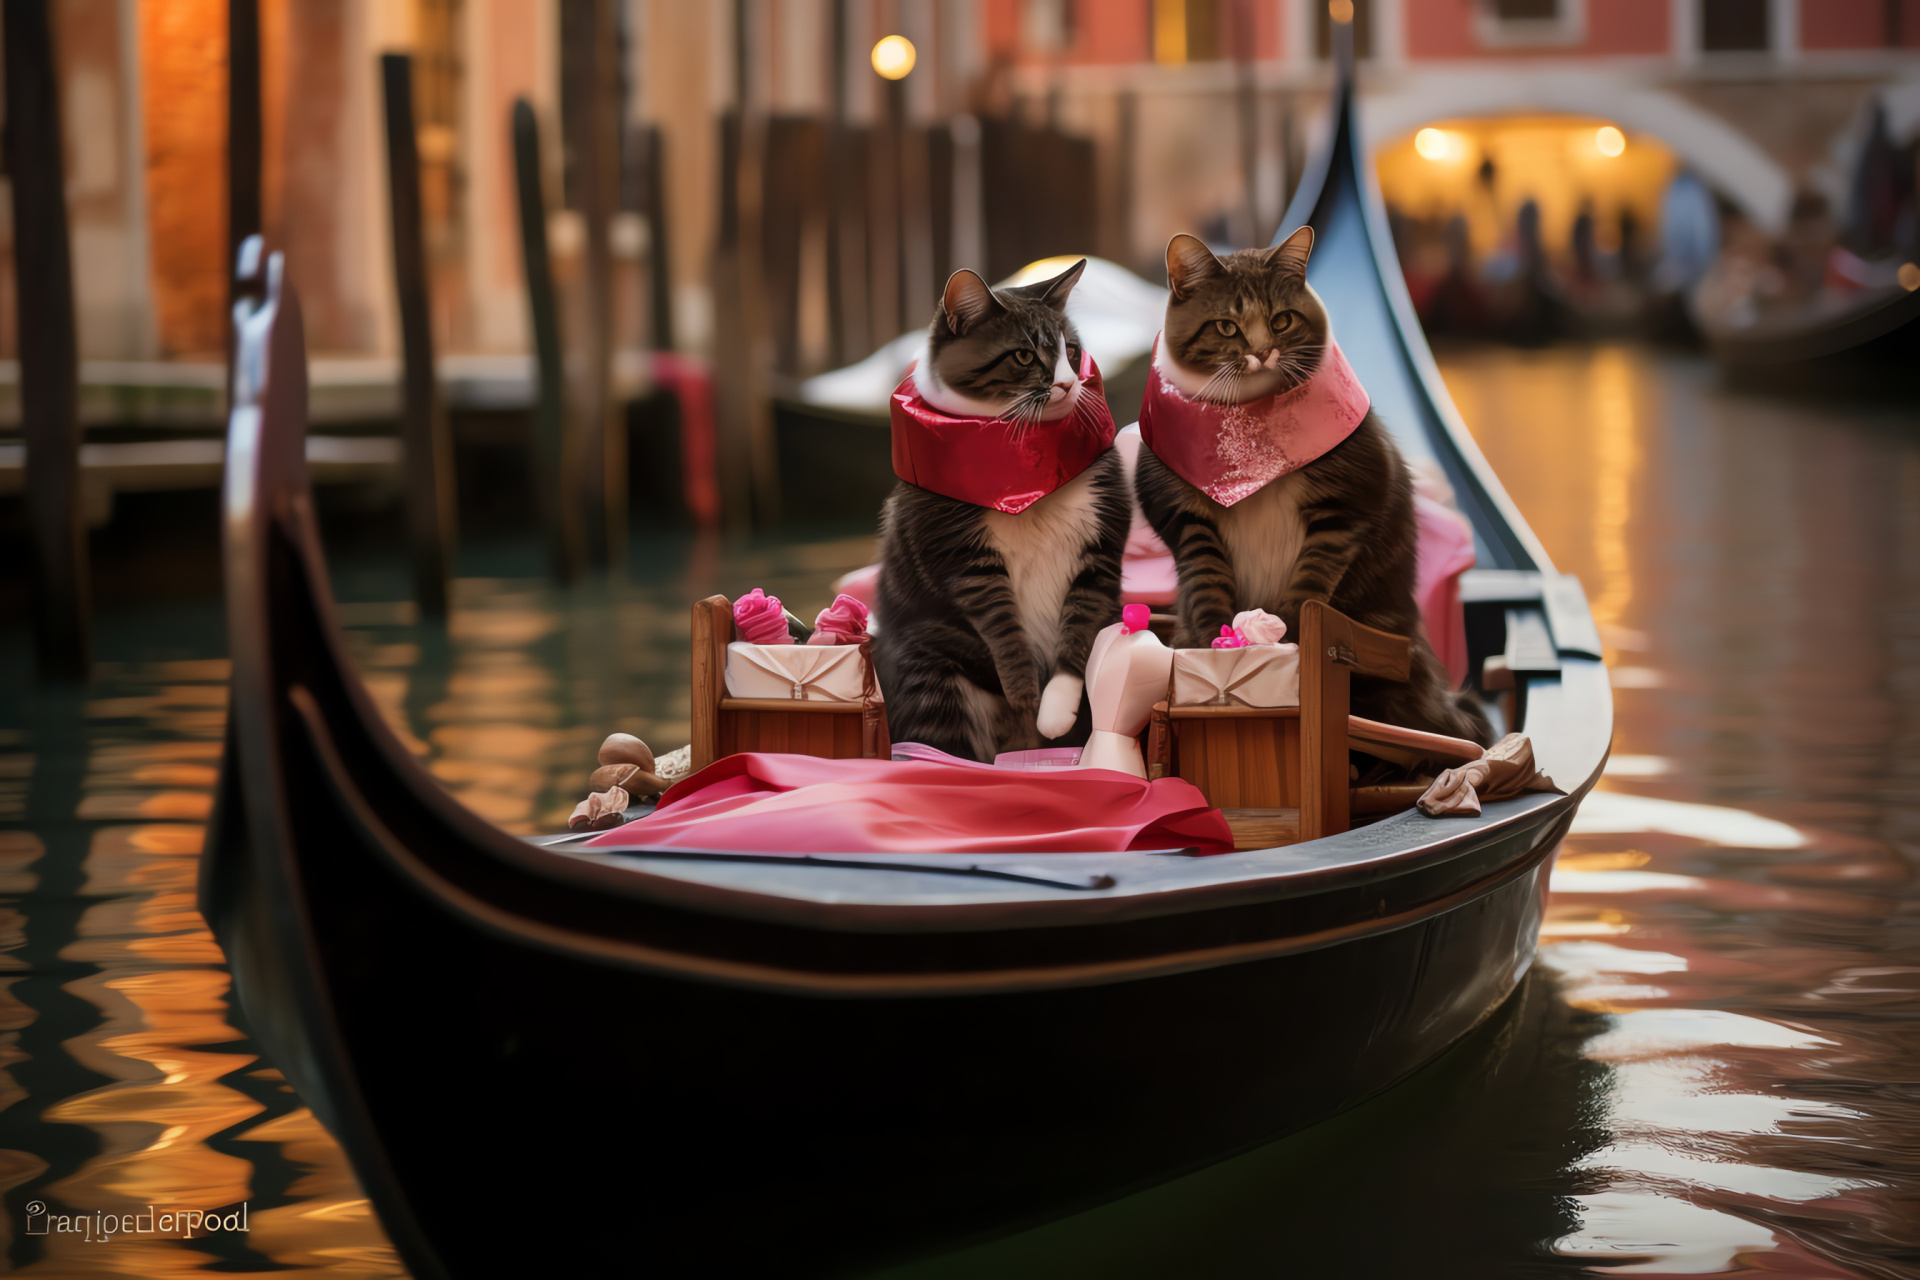 Festive felines in gondola, Venetian Valentine's tour, romantic canal journey, Italian holiday ambiance, Valentine city charm, HD Desktop Image